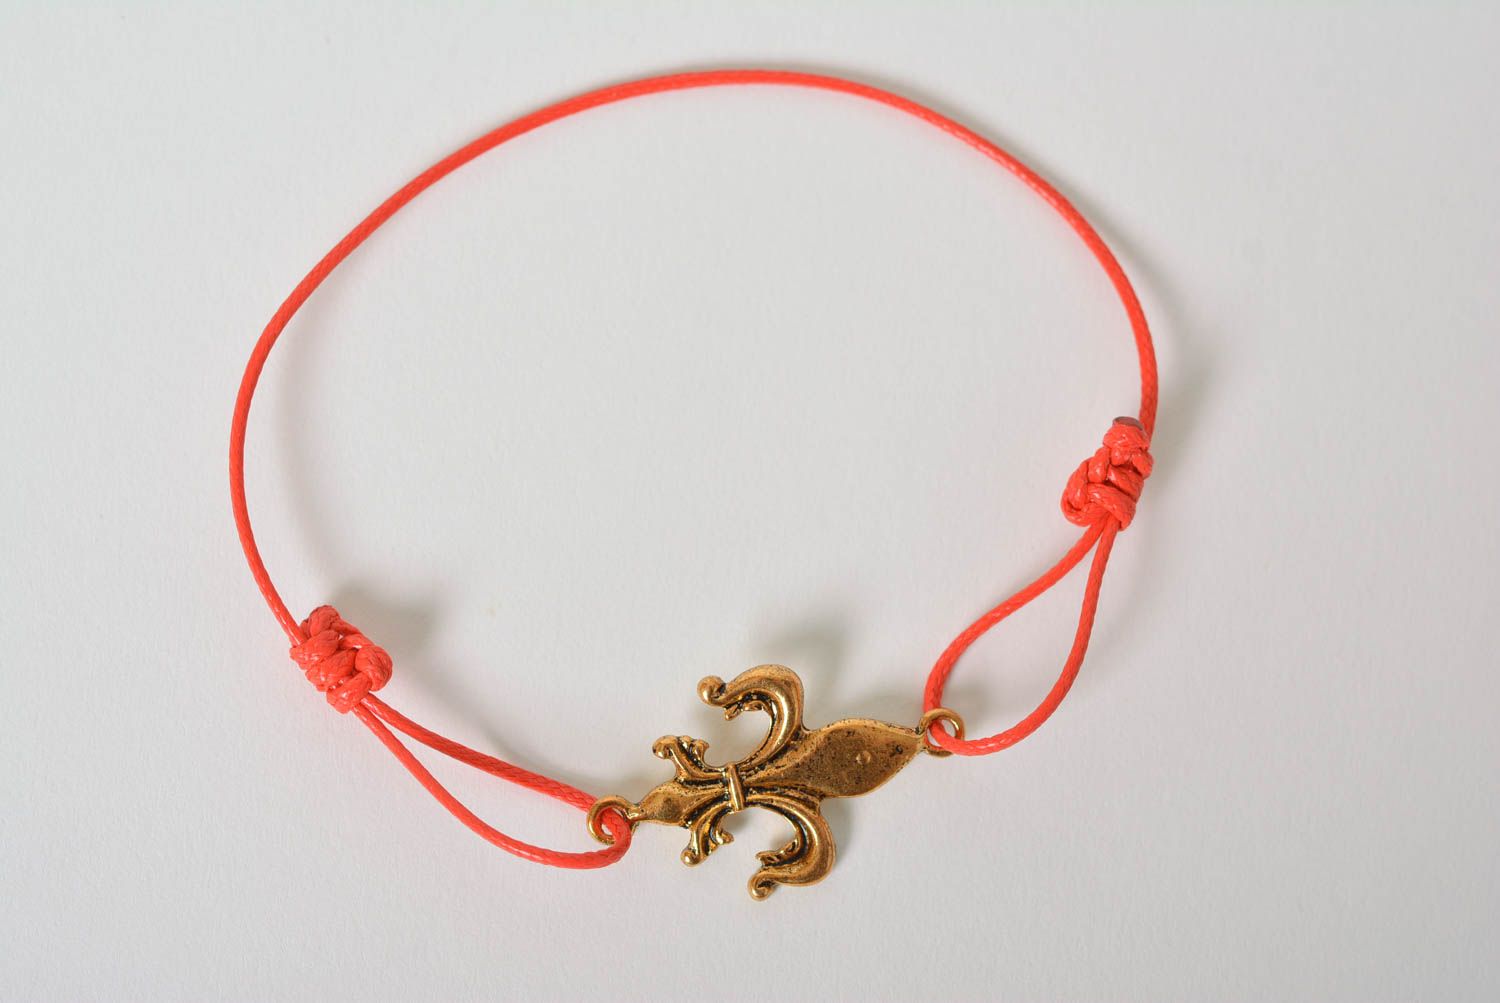 Handmade textile bracelet stylish wrist accessory female bracelet gift for her photo 5